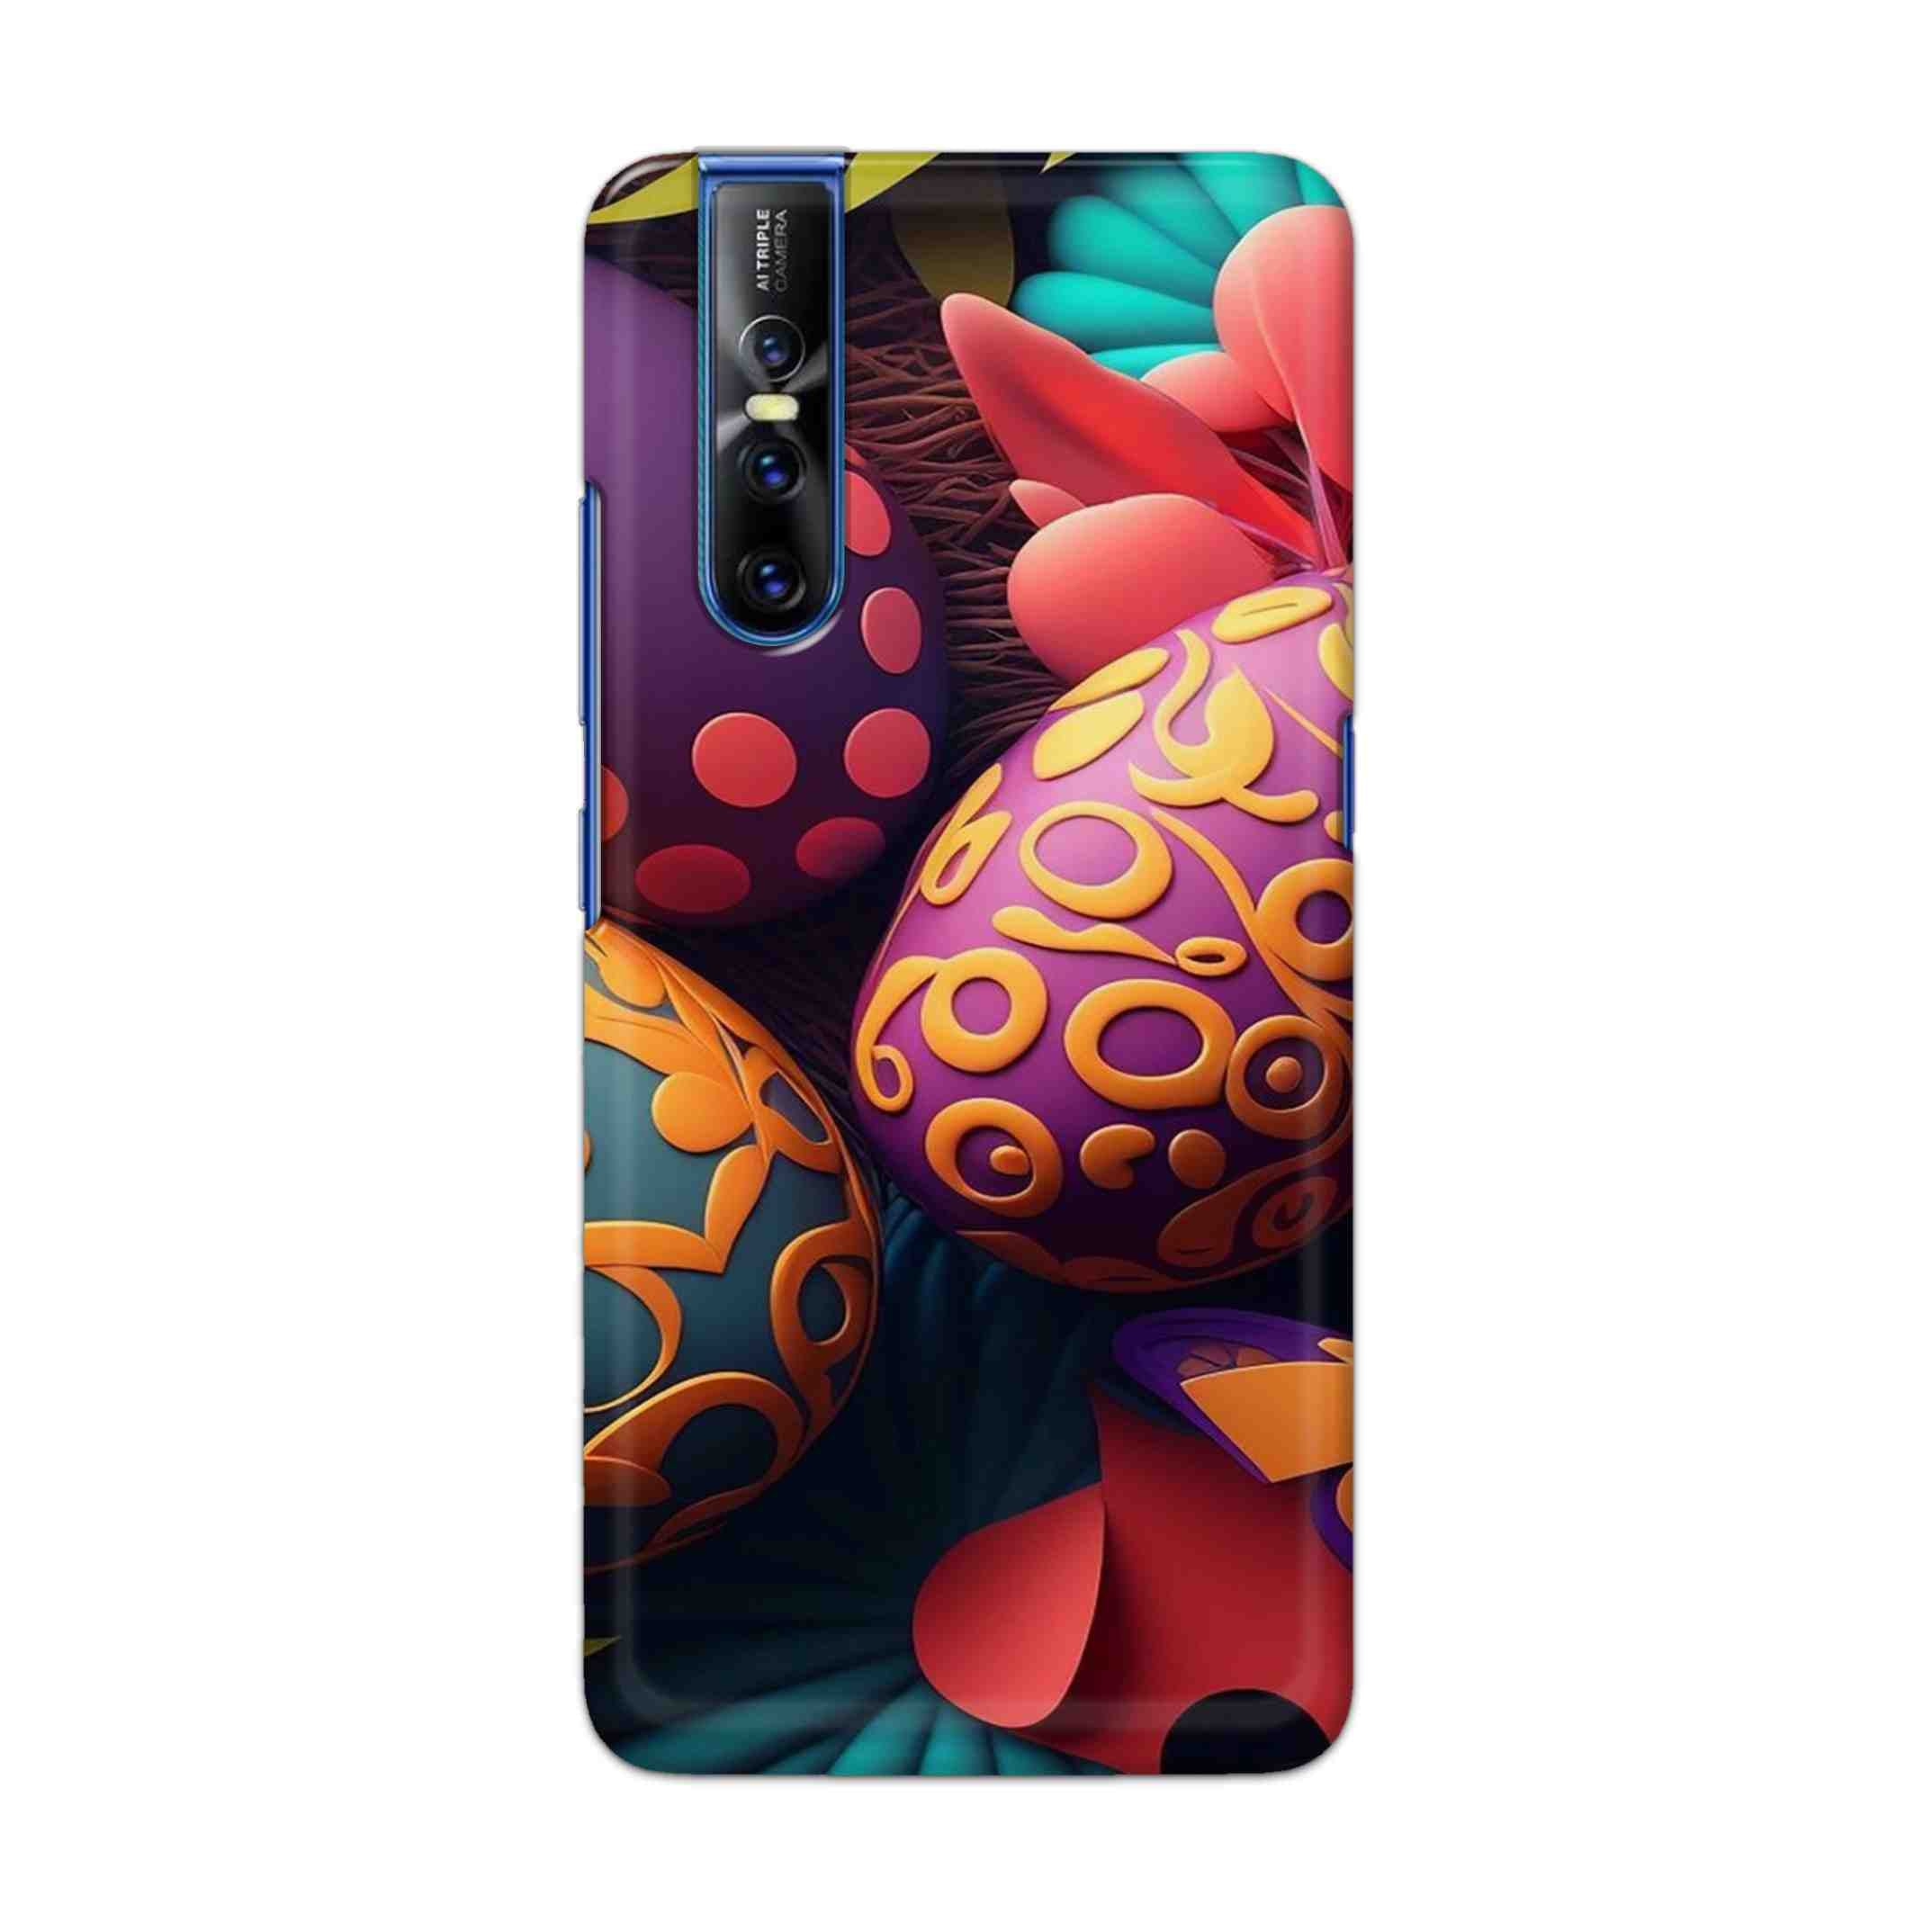 Buy Easter Egg Hard Back Mobile Phone Case Cover For Vivo V15 Pro Online